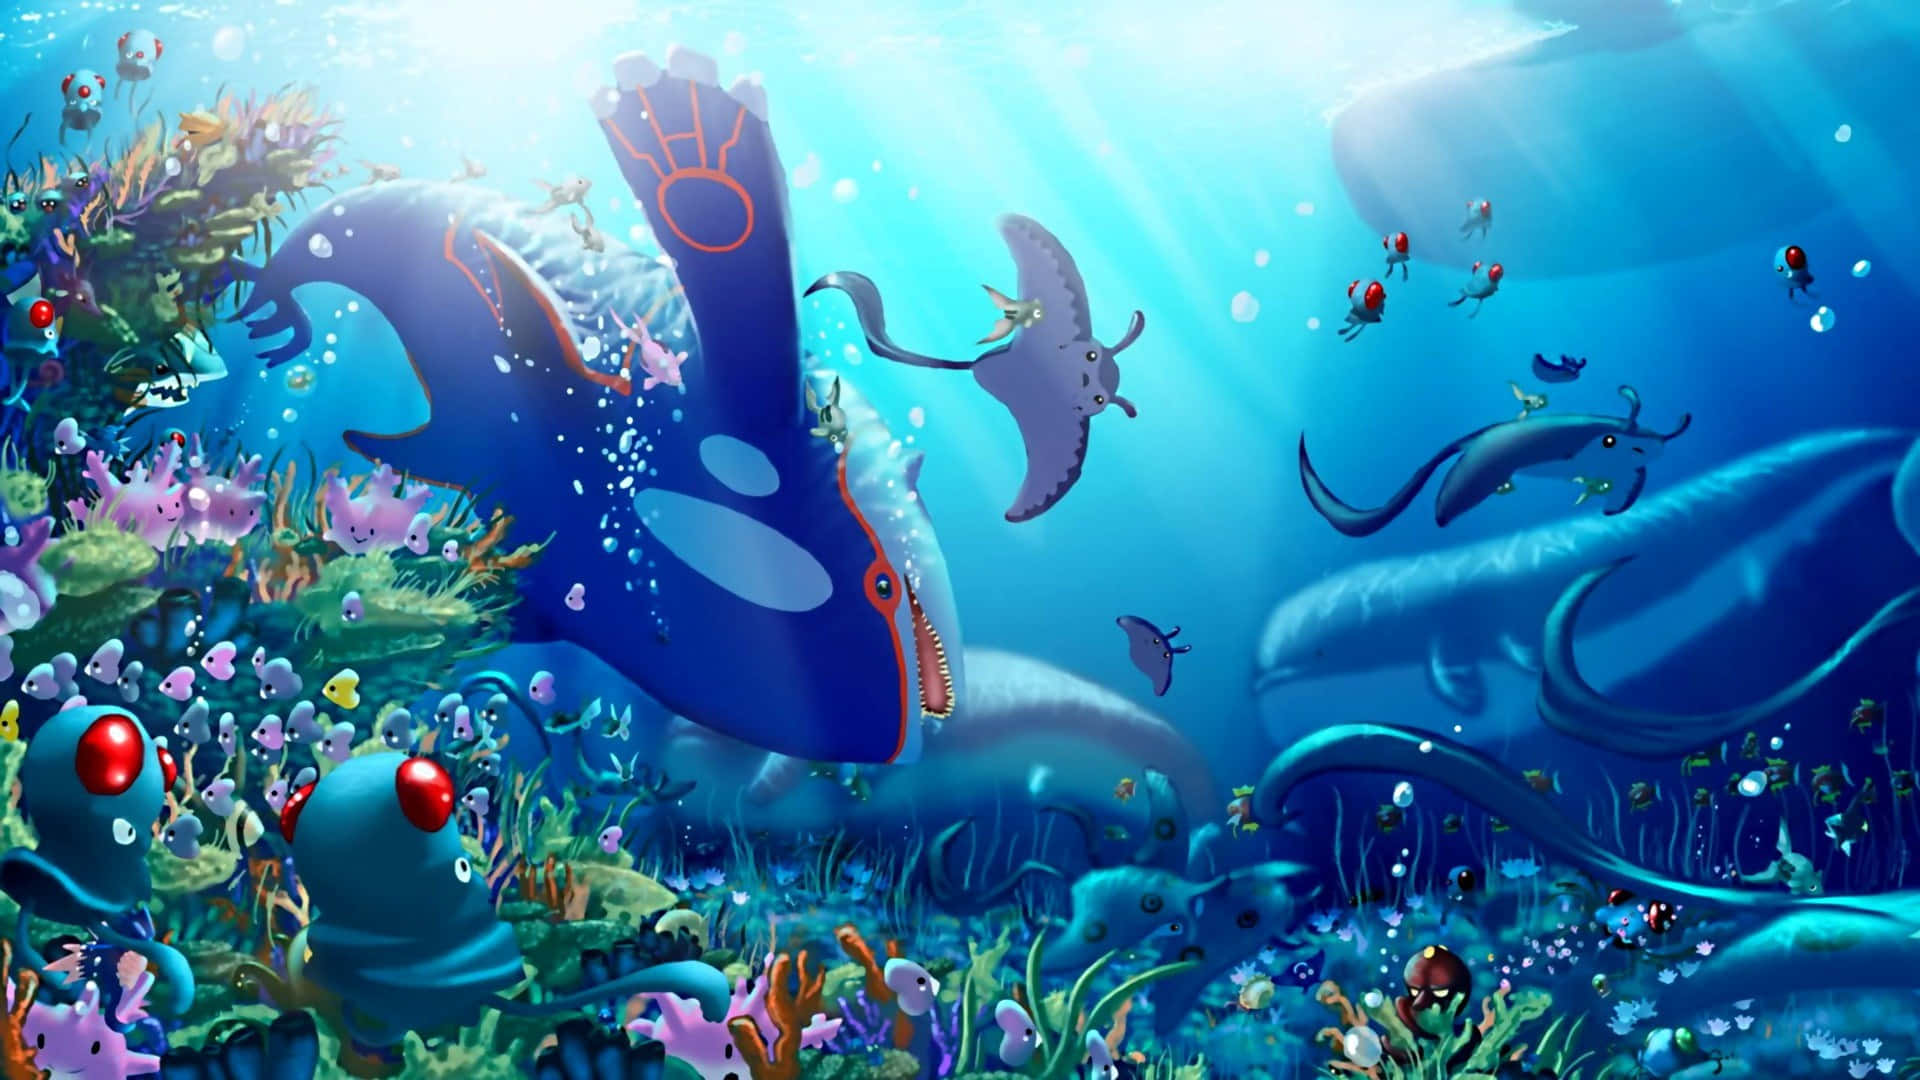 : Majestic Underwater Scene with Schools of Fish